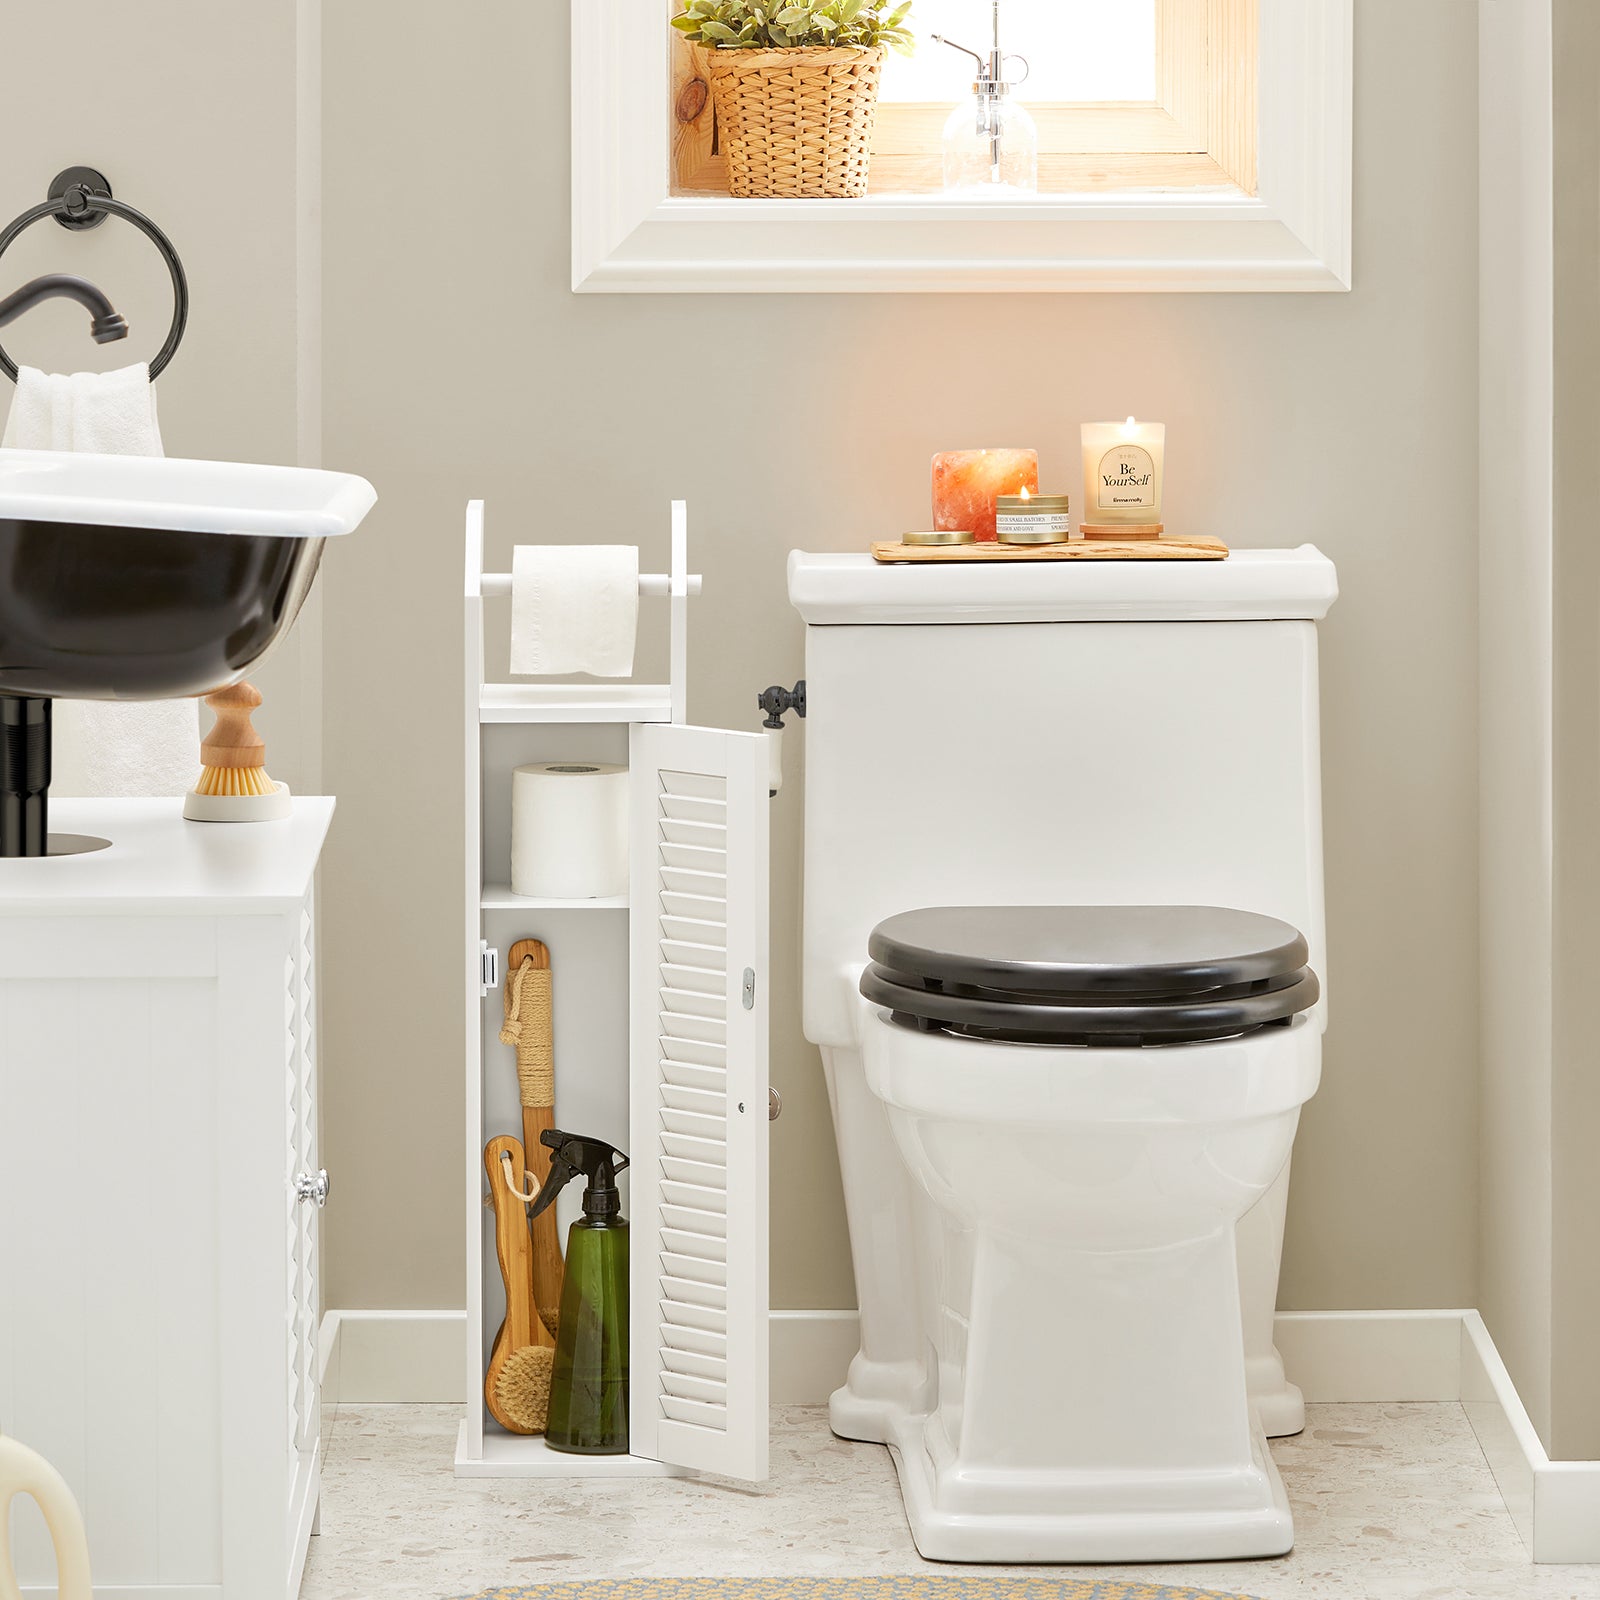 SoBuy White Free Standing Wooden Bathroom Storage Cabinet,Toilet Brush Holder,BZR49-W